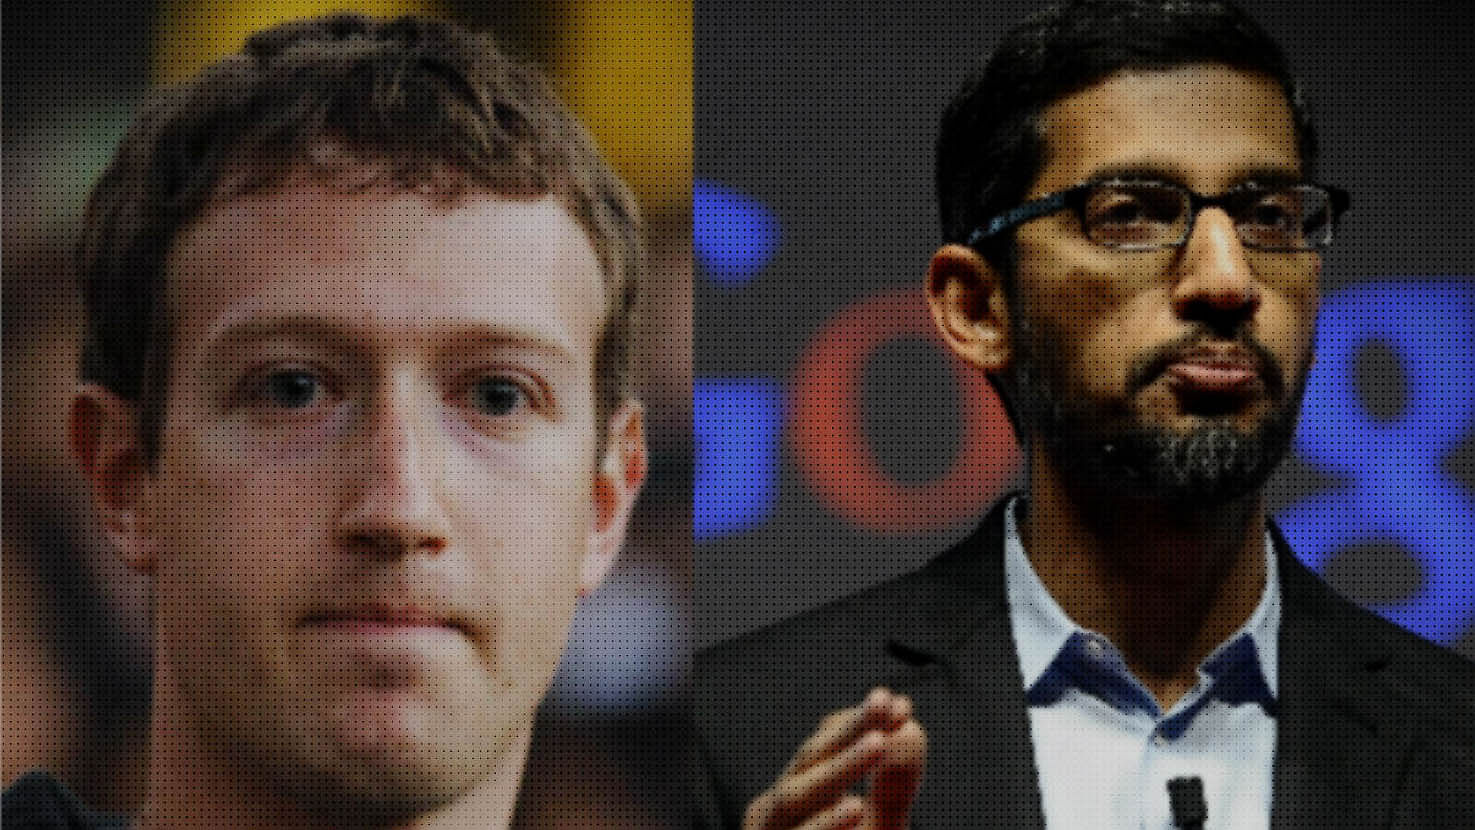 Zuckerberg, Pichai along with Brendan Iribe of Oculus will form the foundation. (Photo: <b>The Quint</b>)